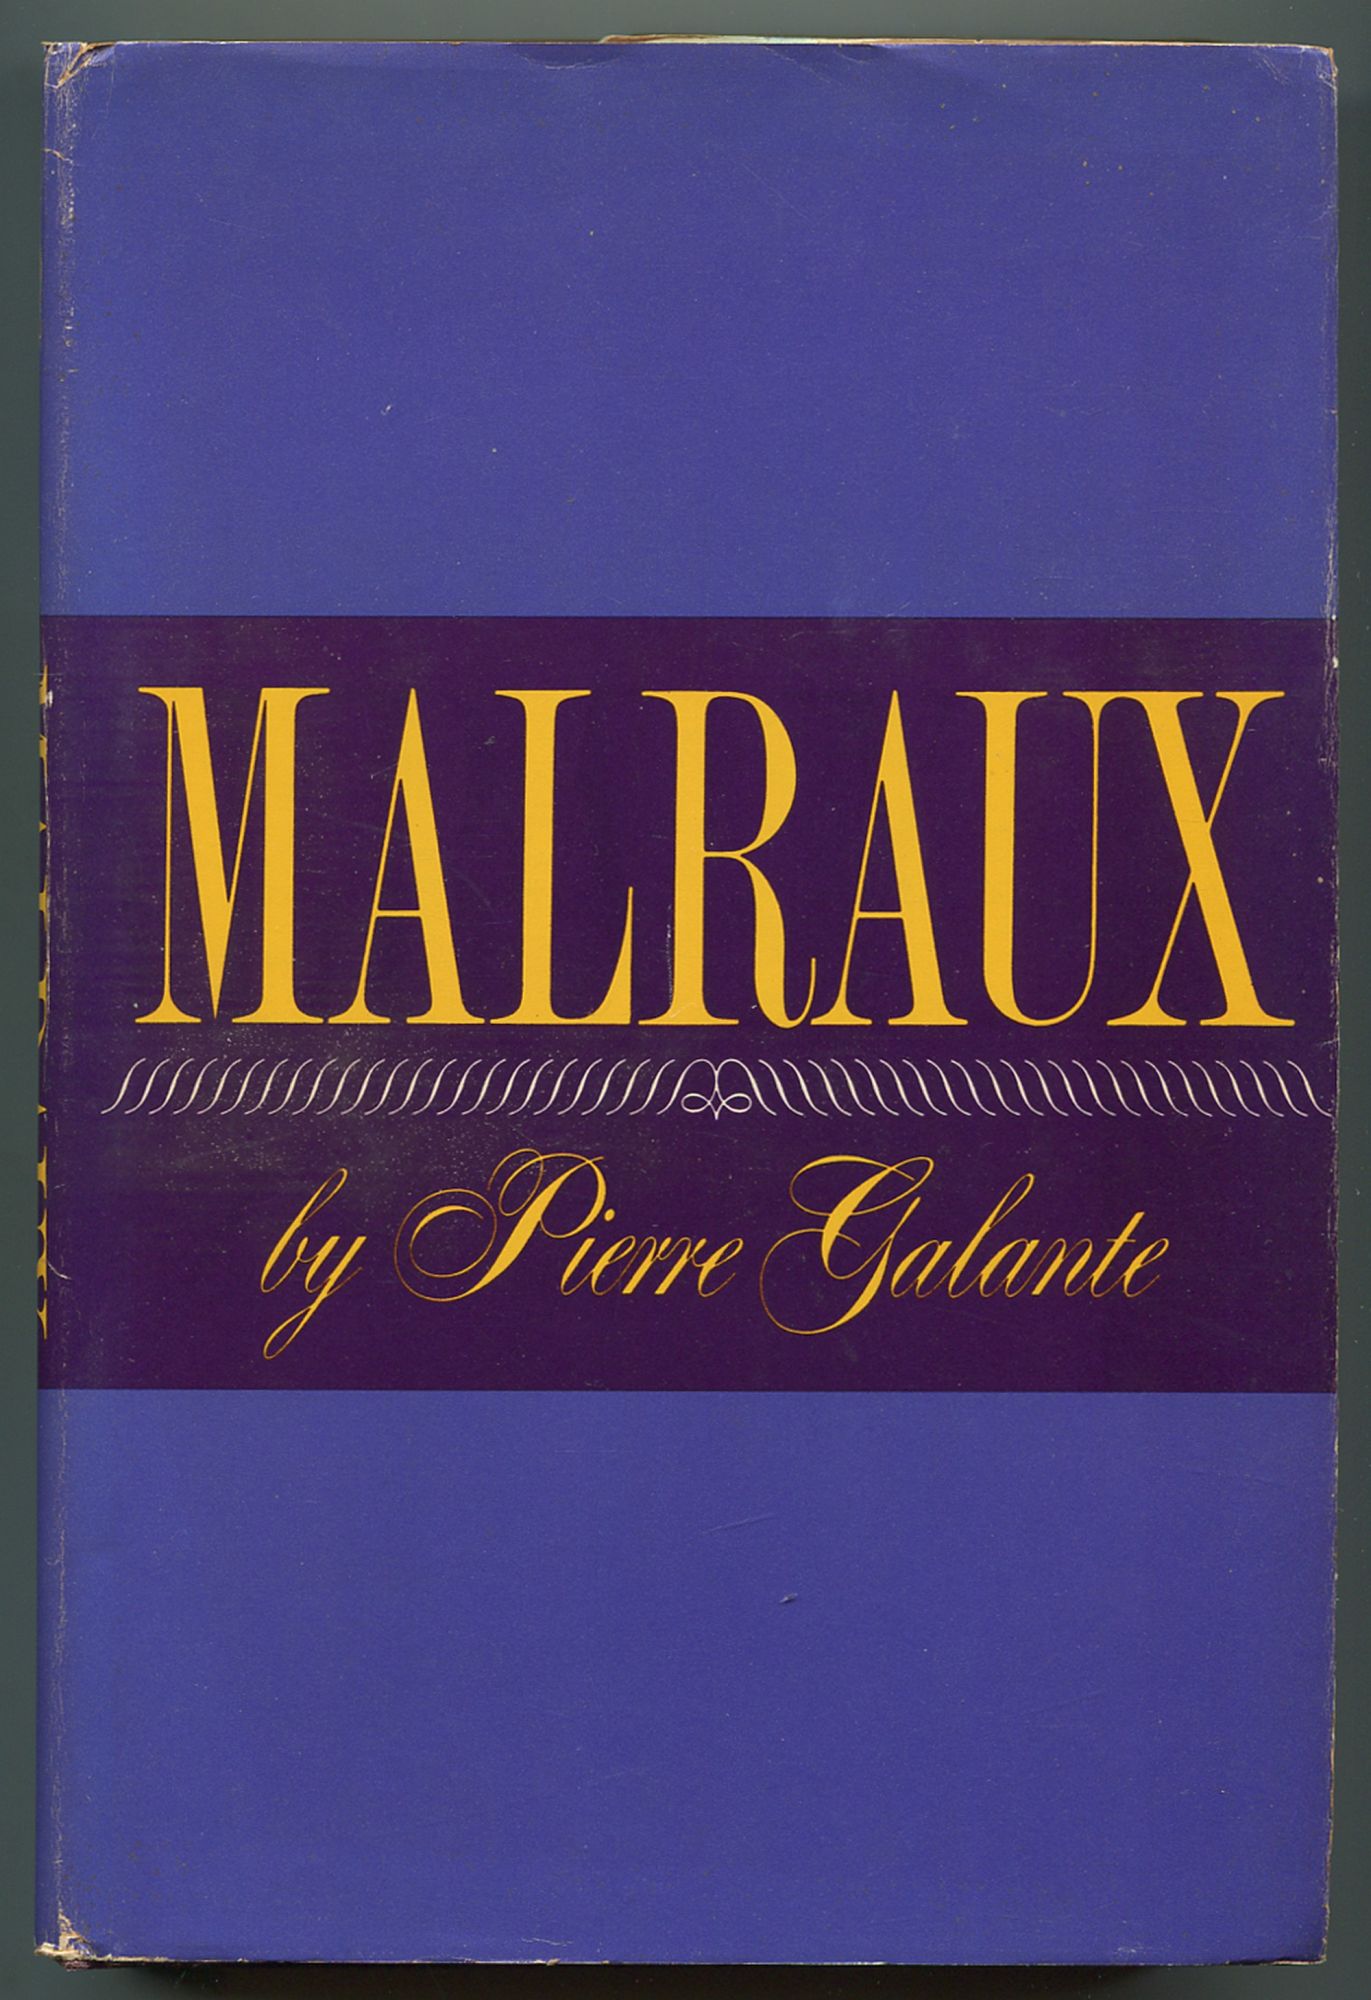 Malraux - GALANTE, Pierre